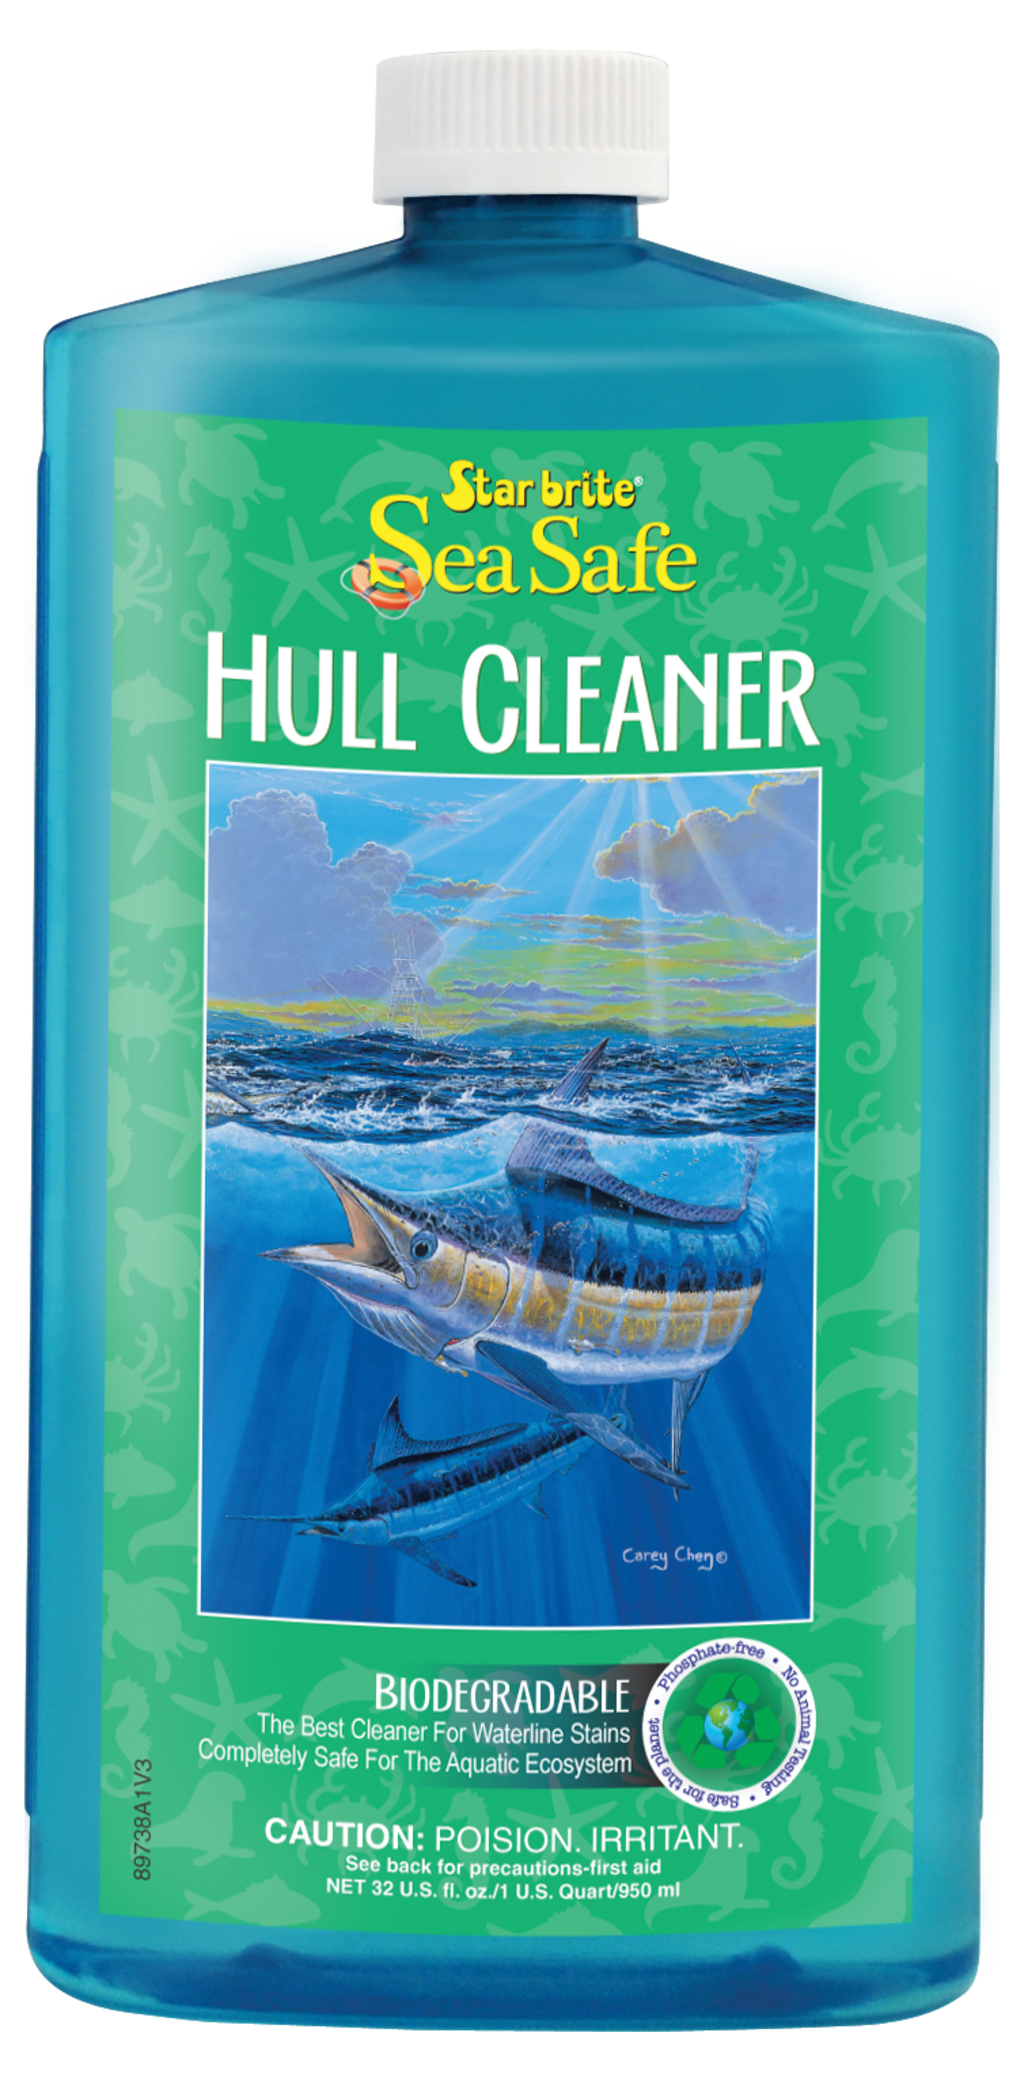 Starbrite Sea Safe Hull Cleaner